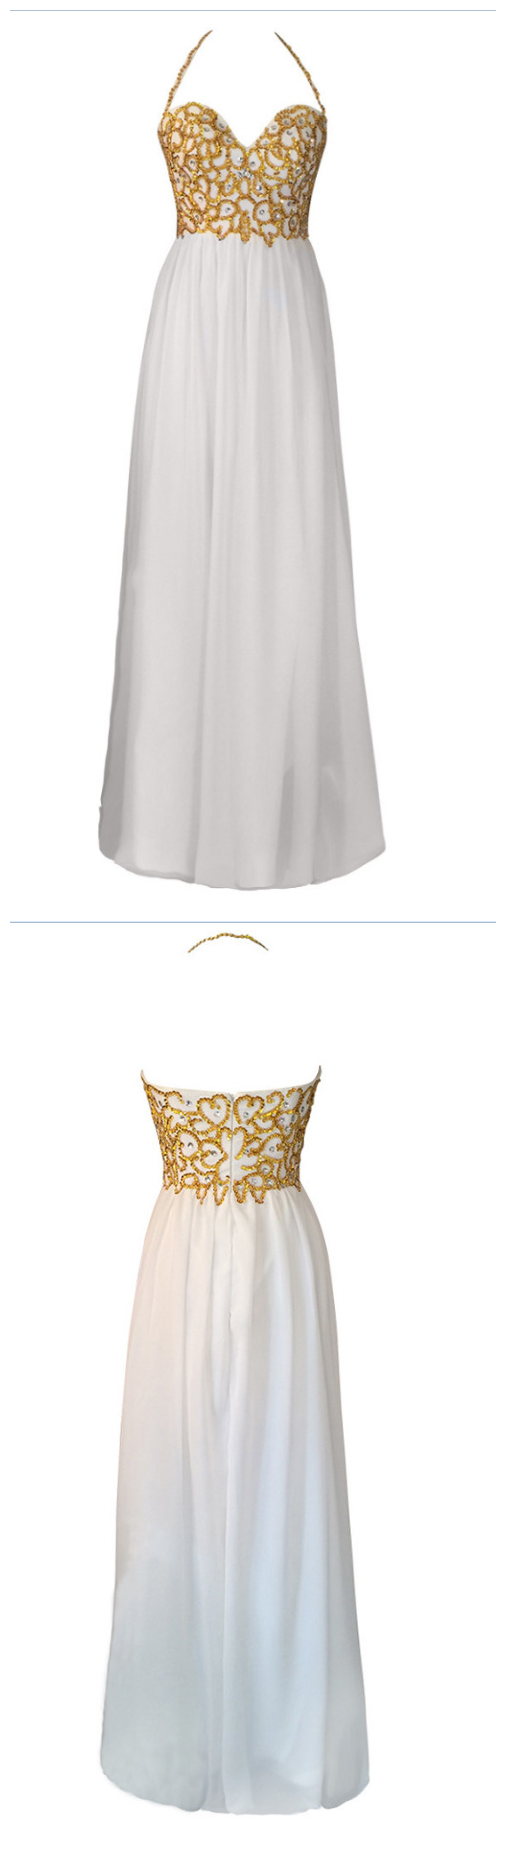 Long A-line White Chiffon Gold Beads Evening Dresses, Vestido De Festa Low Back Prom Party Gown